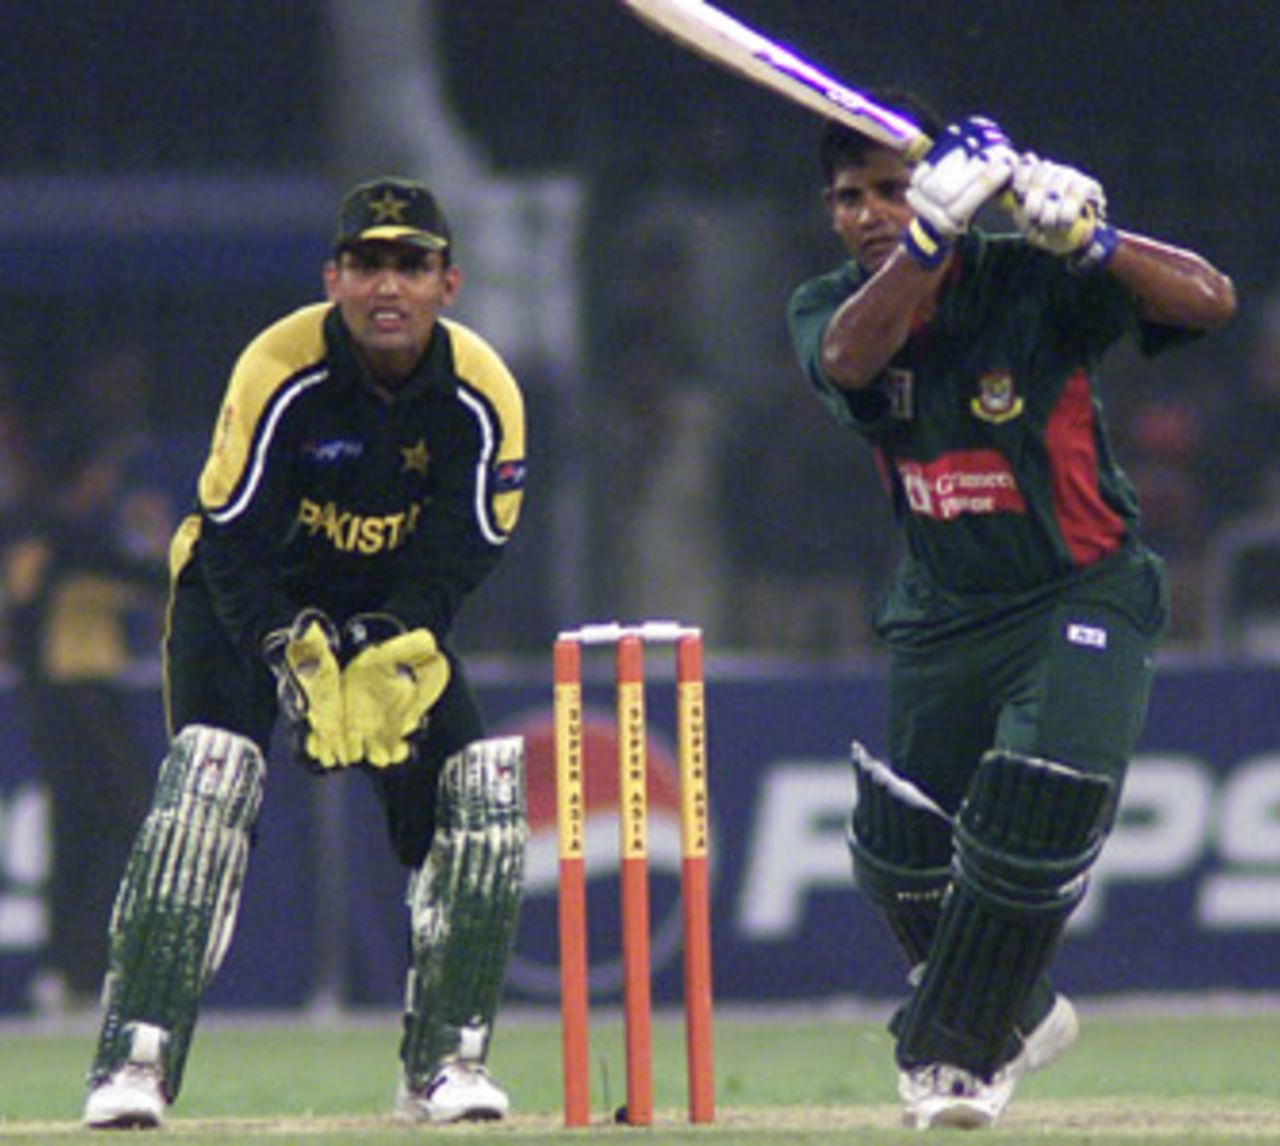 Mushfiqur Rahman drives during his innings, Pakistan v Bangladesh, 3rd ODI, Lahore, September 15, 2003.